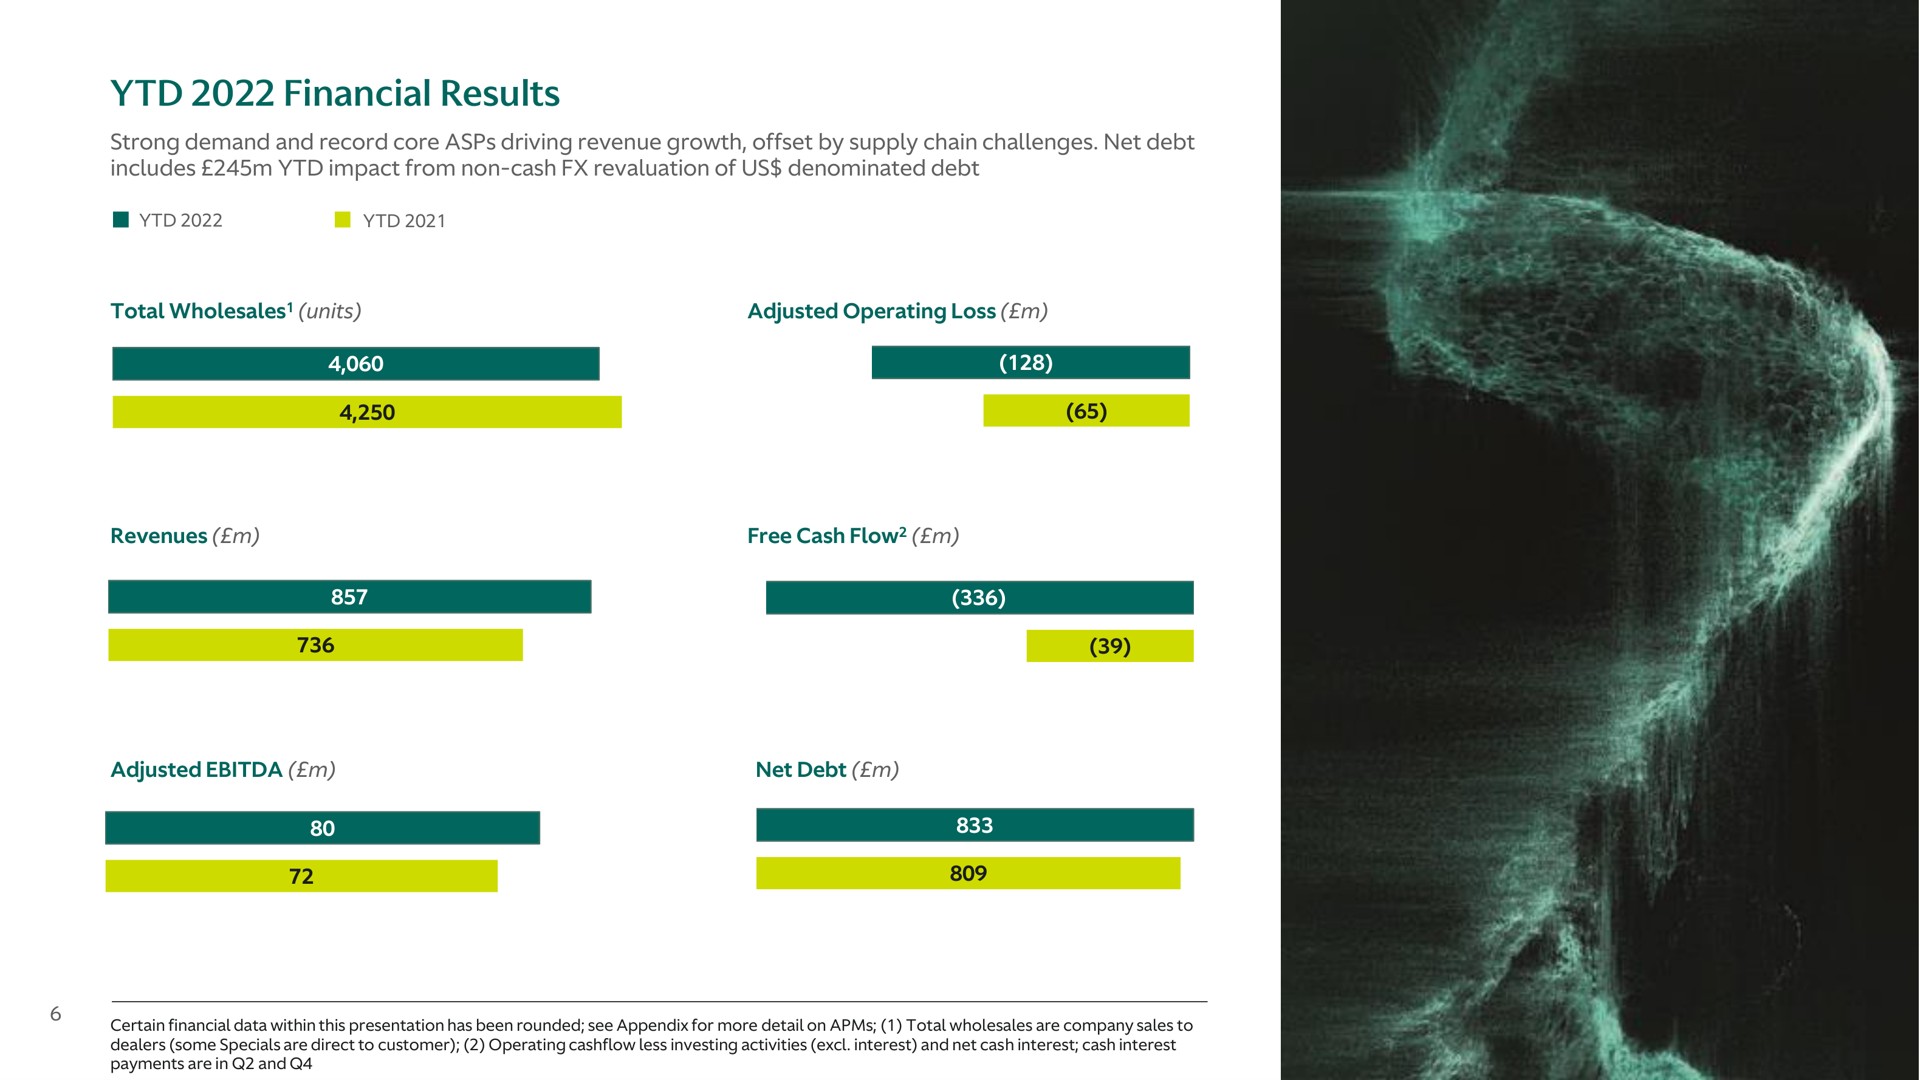 financial results | Aston Martin Lagonda